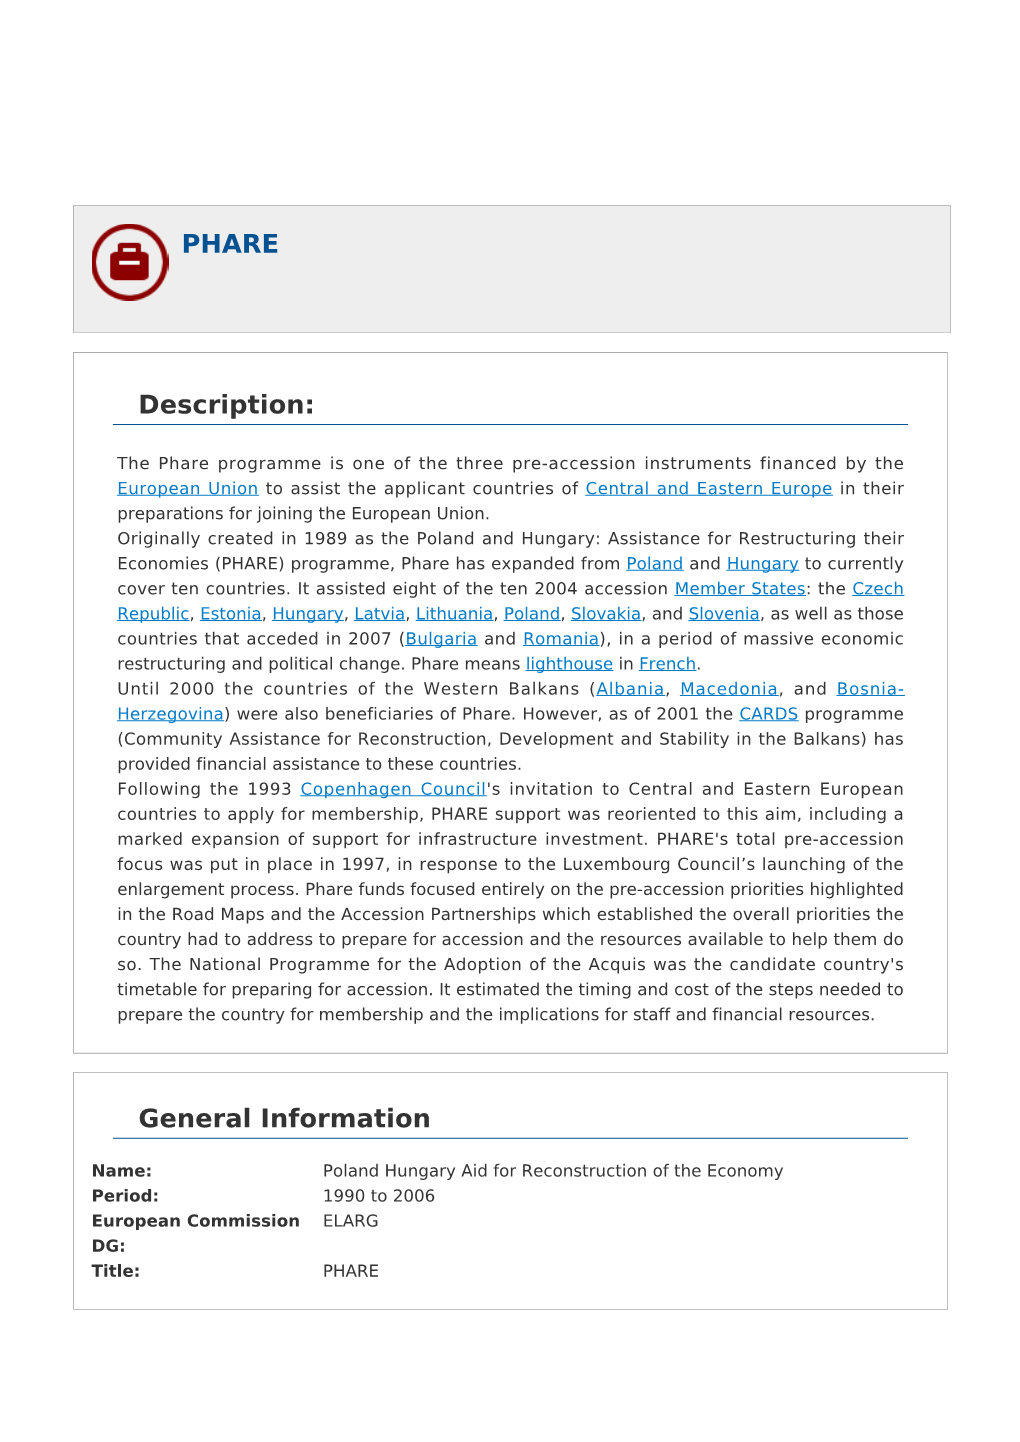 PHARE Description: General Information